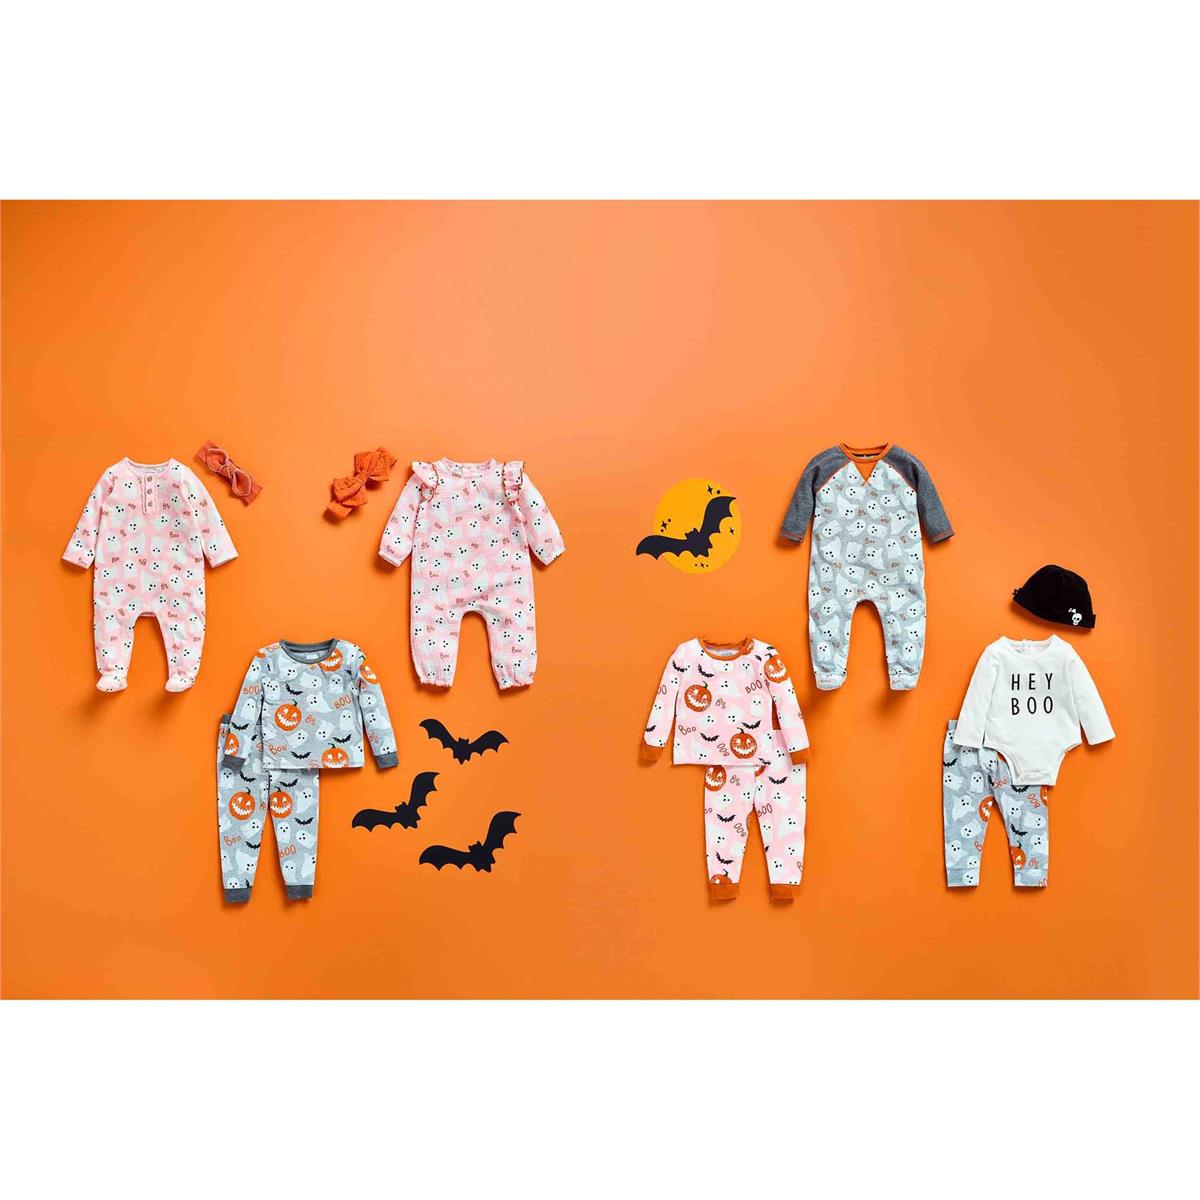 Gray Glow-In-The-Dark Halloween Pajama Set